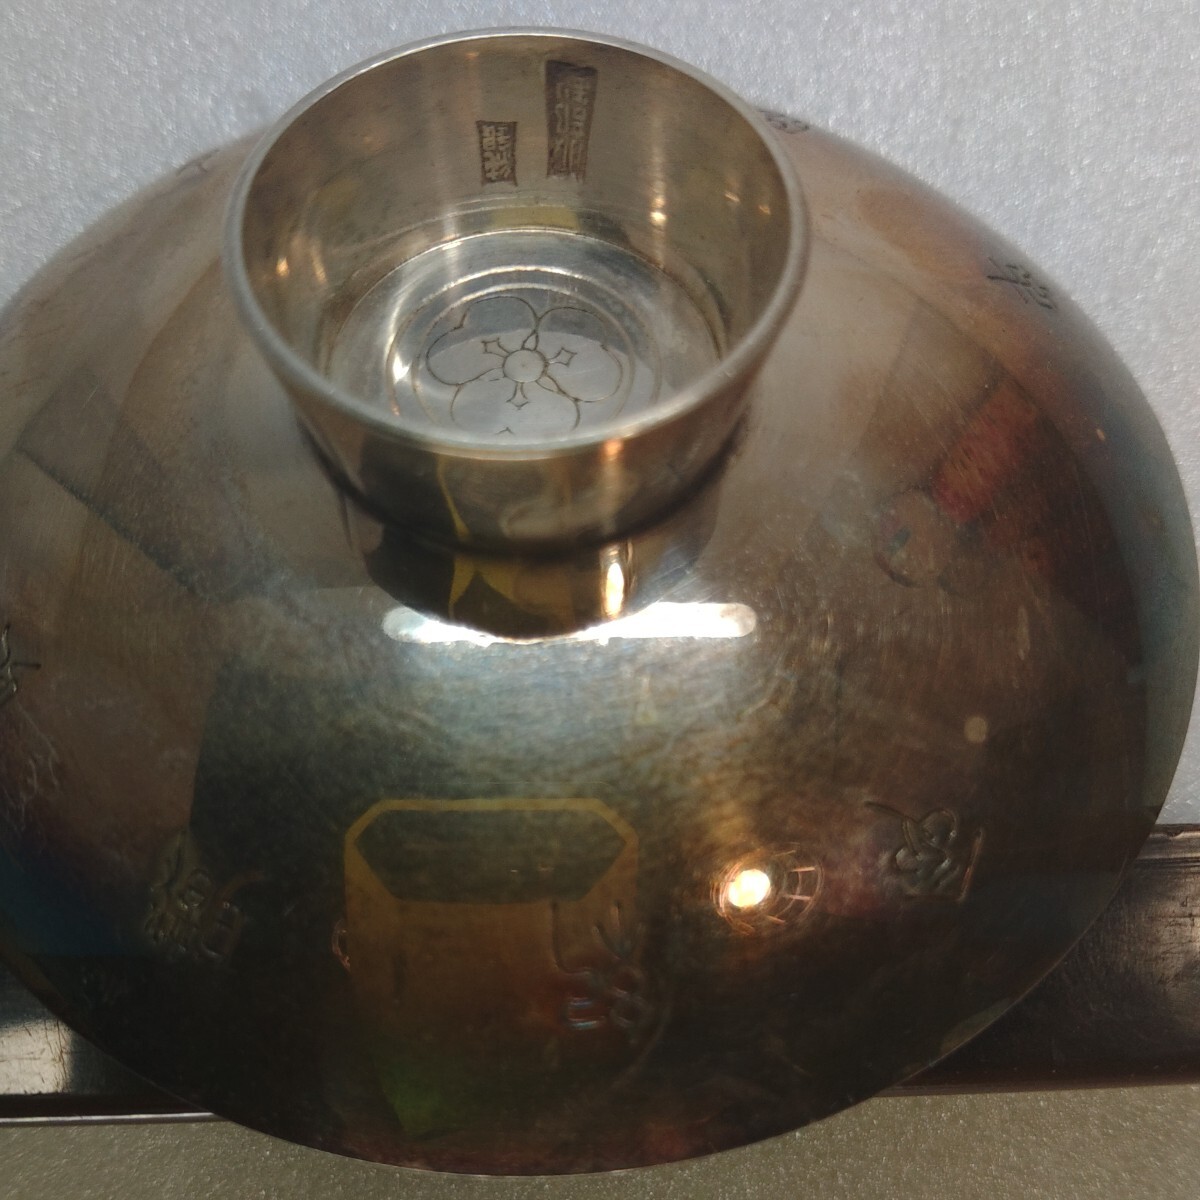  original silver silver sake cup Hattori made original silver made silver SILVER